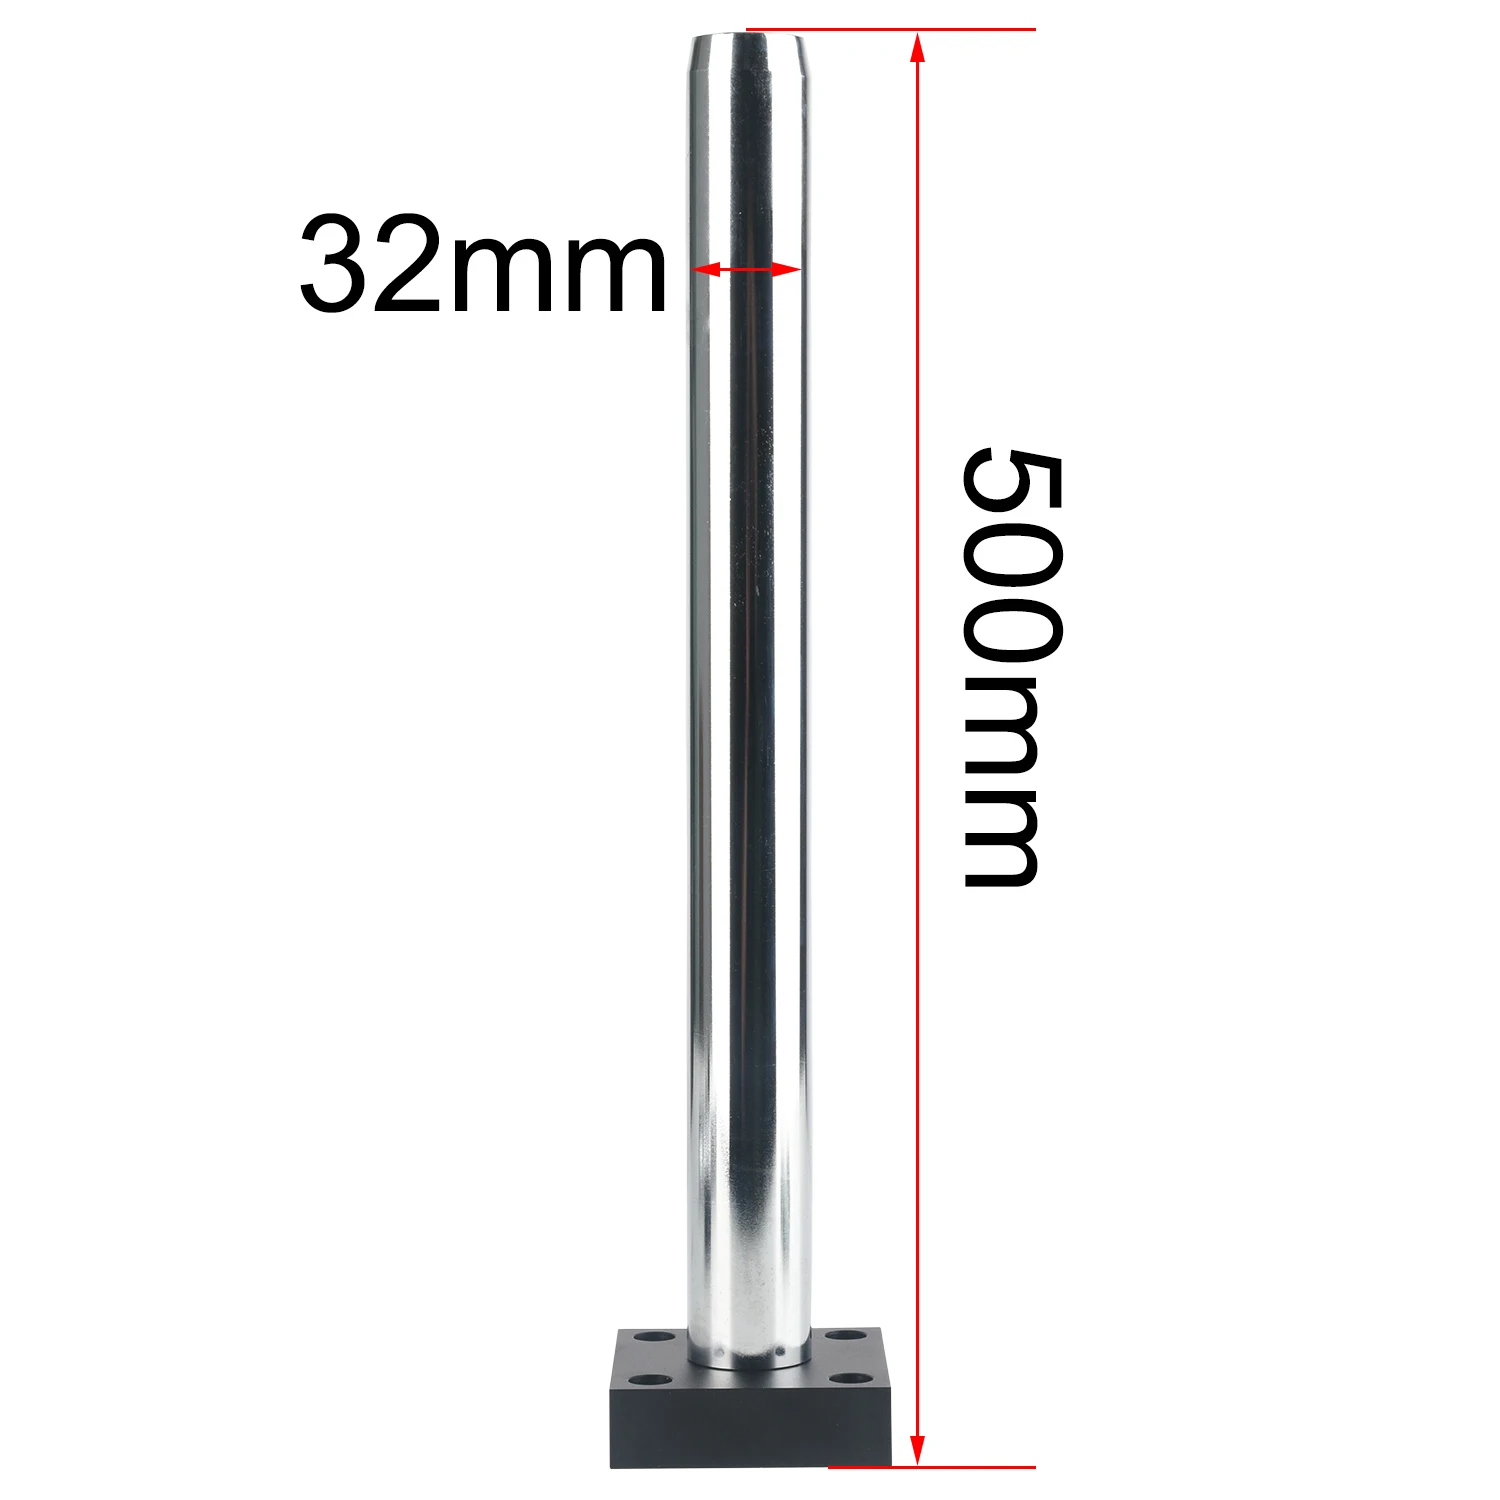 

Кронштейн для оптического микроскопа KOPPACE, длина колонки 500 мм, диаметр колонки 32 мм, отверстие для винта M6